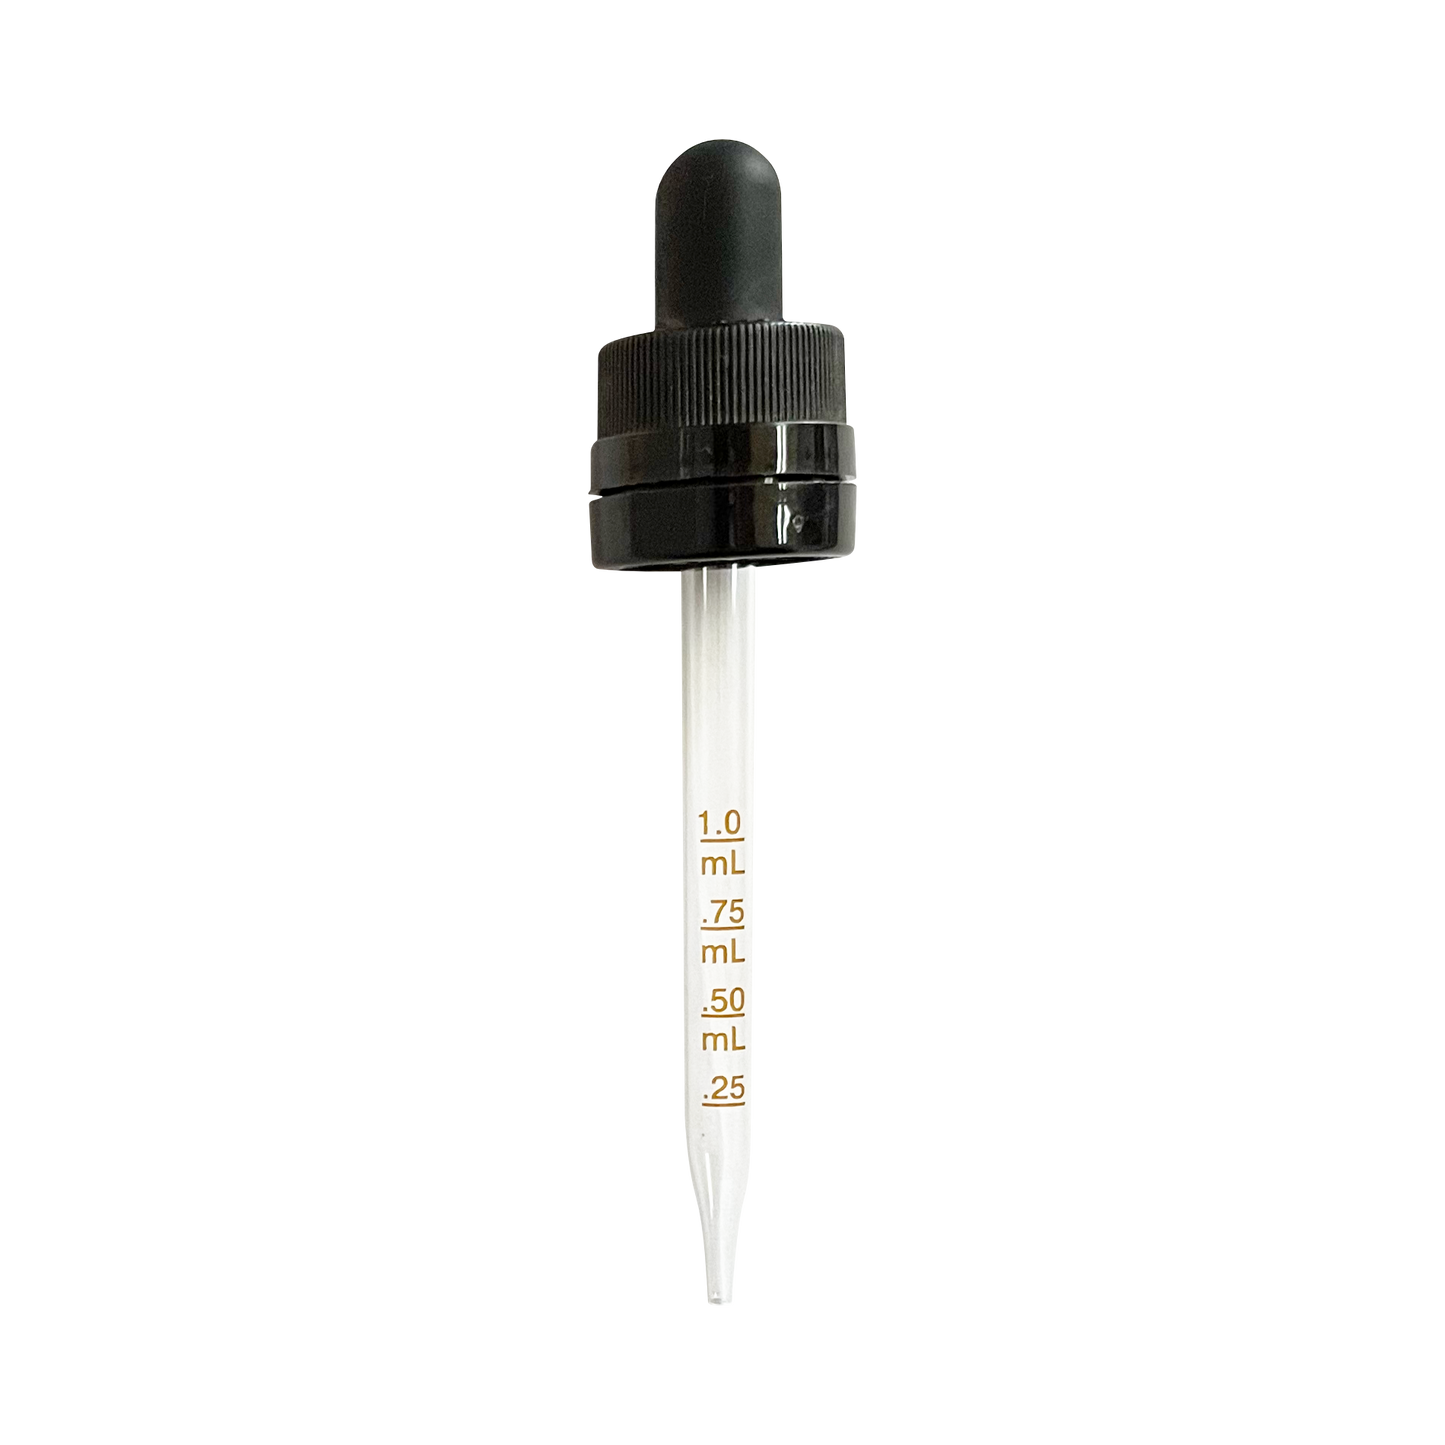 (60 ml) Black CRC/TE 18 DIN (18-410) Dropper with 94mm Graduated Glass Pipette